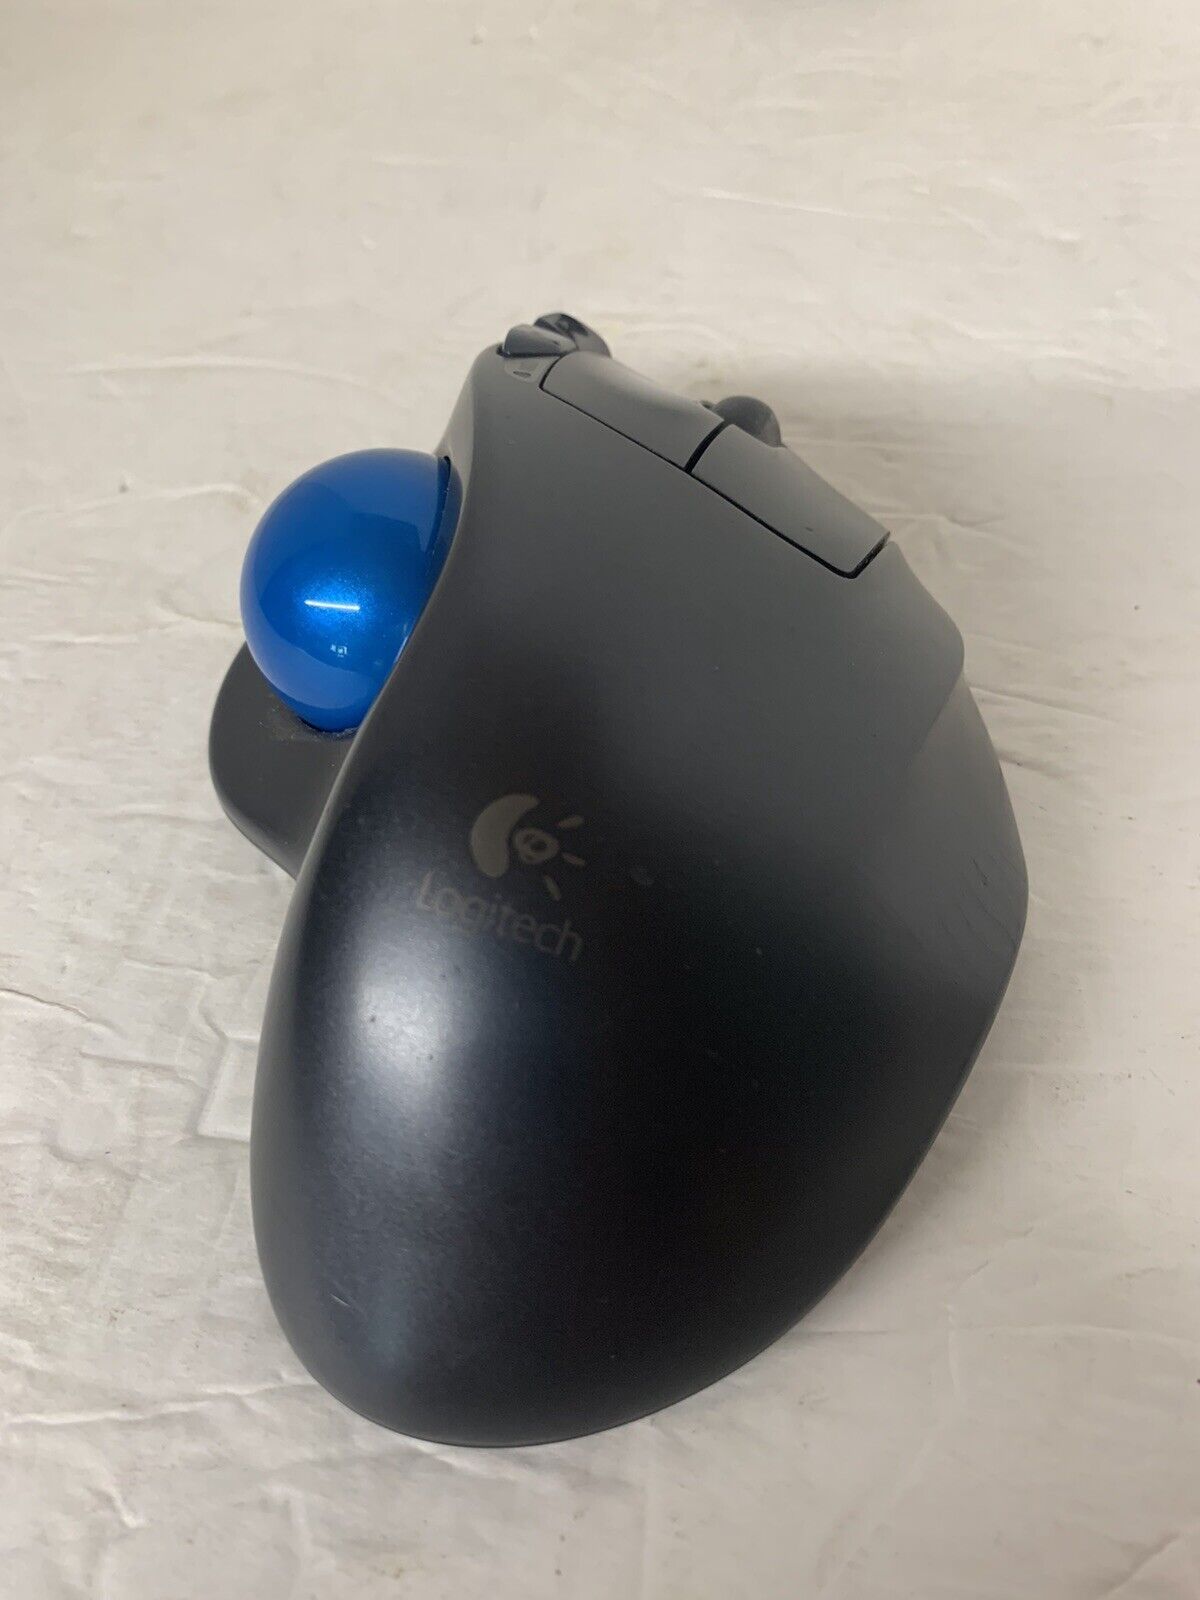 Logitech M570 Wireless Trackball Mouse Ergonomic With Dongle - No Batteries